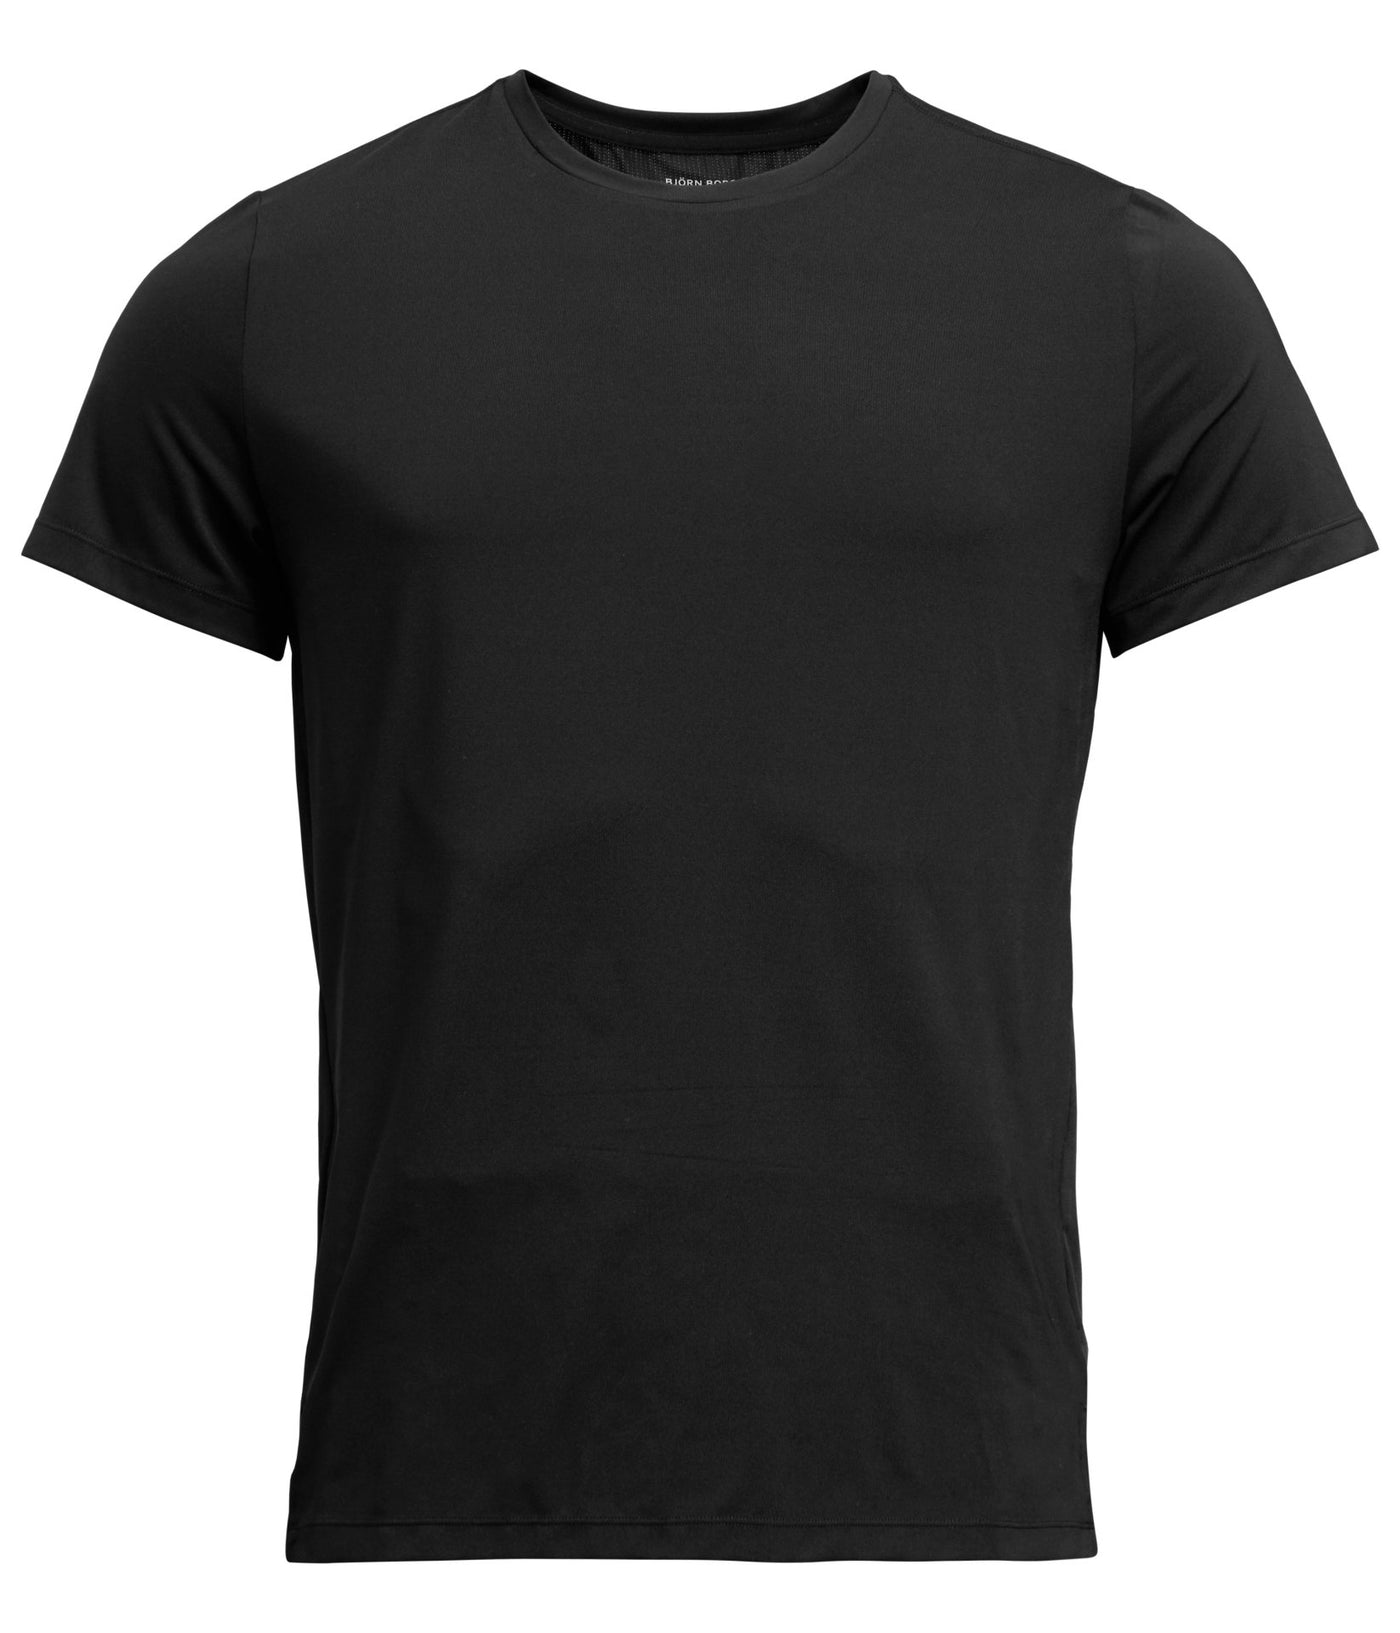 BJORN BORG Astor Mesh Cross-Training Tee Men's Short Sleeve Top T-Shirt Black - Activemen Clothing